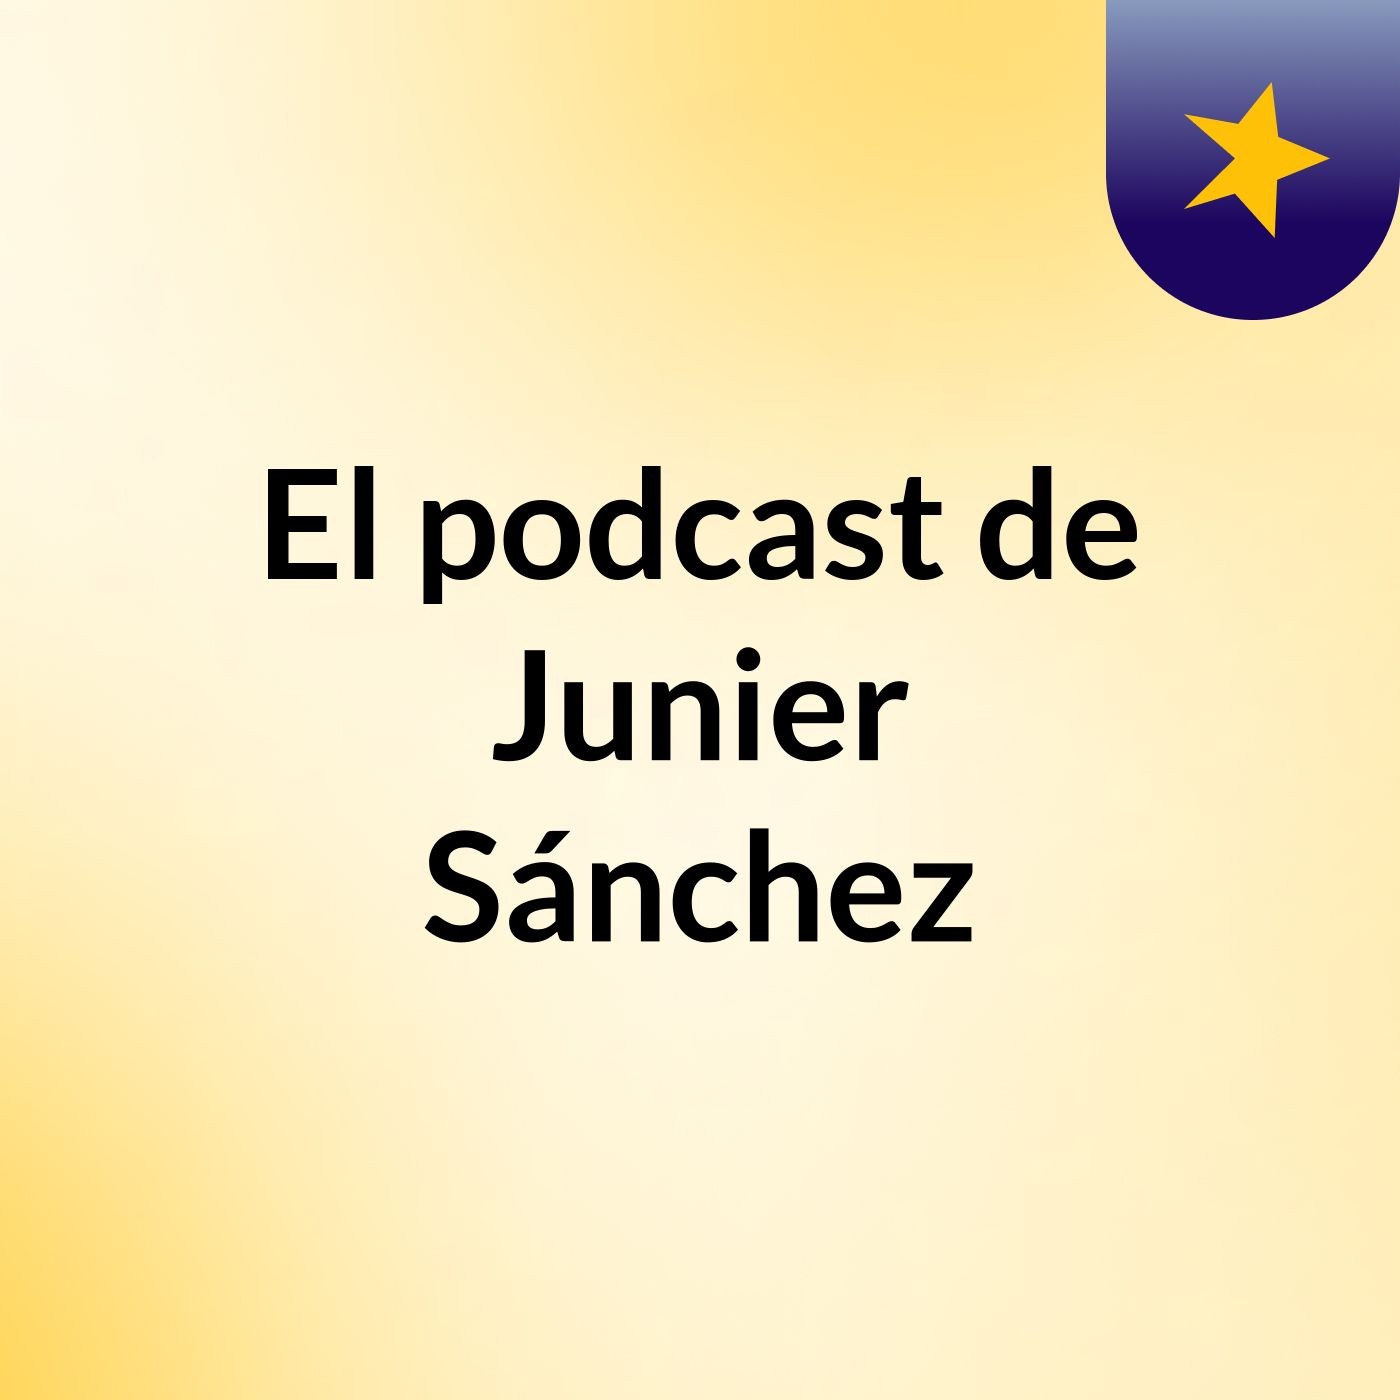 El podcast de Junier Sánchez